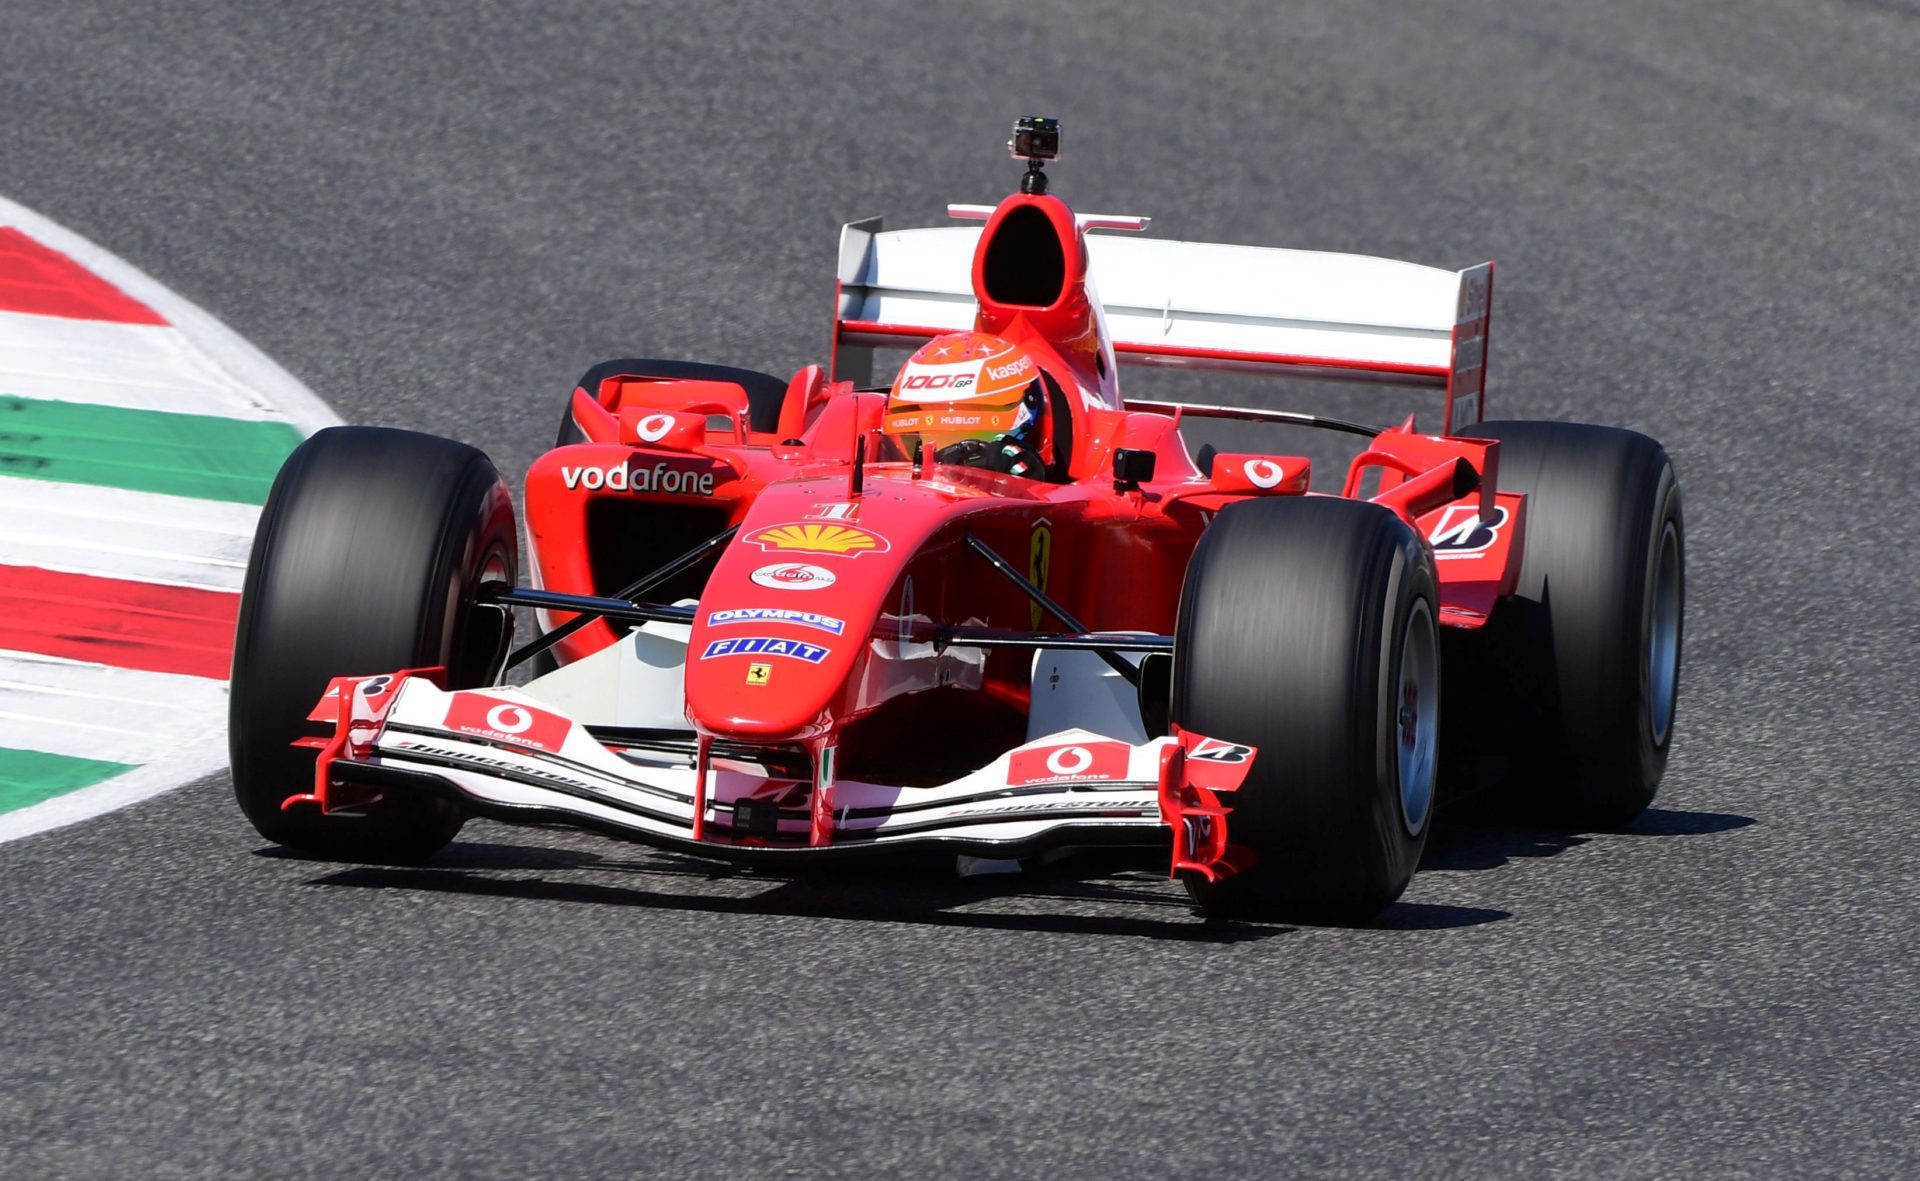 Tuscan Grand Prix – Mugello, Scarperia e San Piero, Italy. Mick Schumacher drives the Ferrari F2004 of his father Michael Schumacher during a display run before the race.